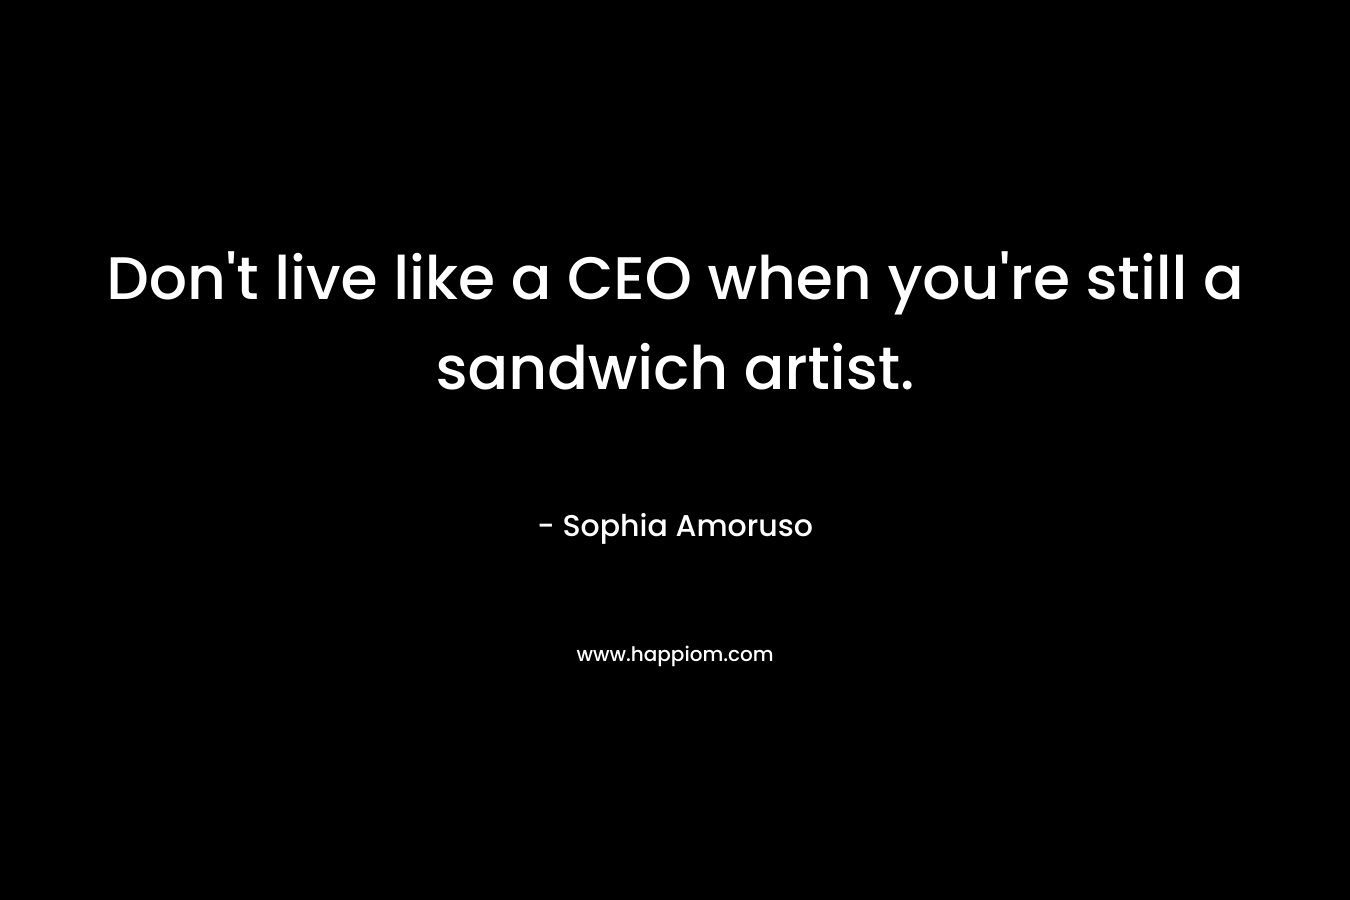 Don't live like a CEO when you're still a sandwich artist.